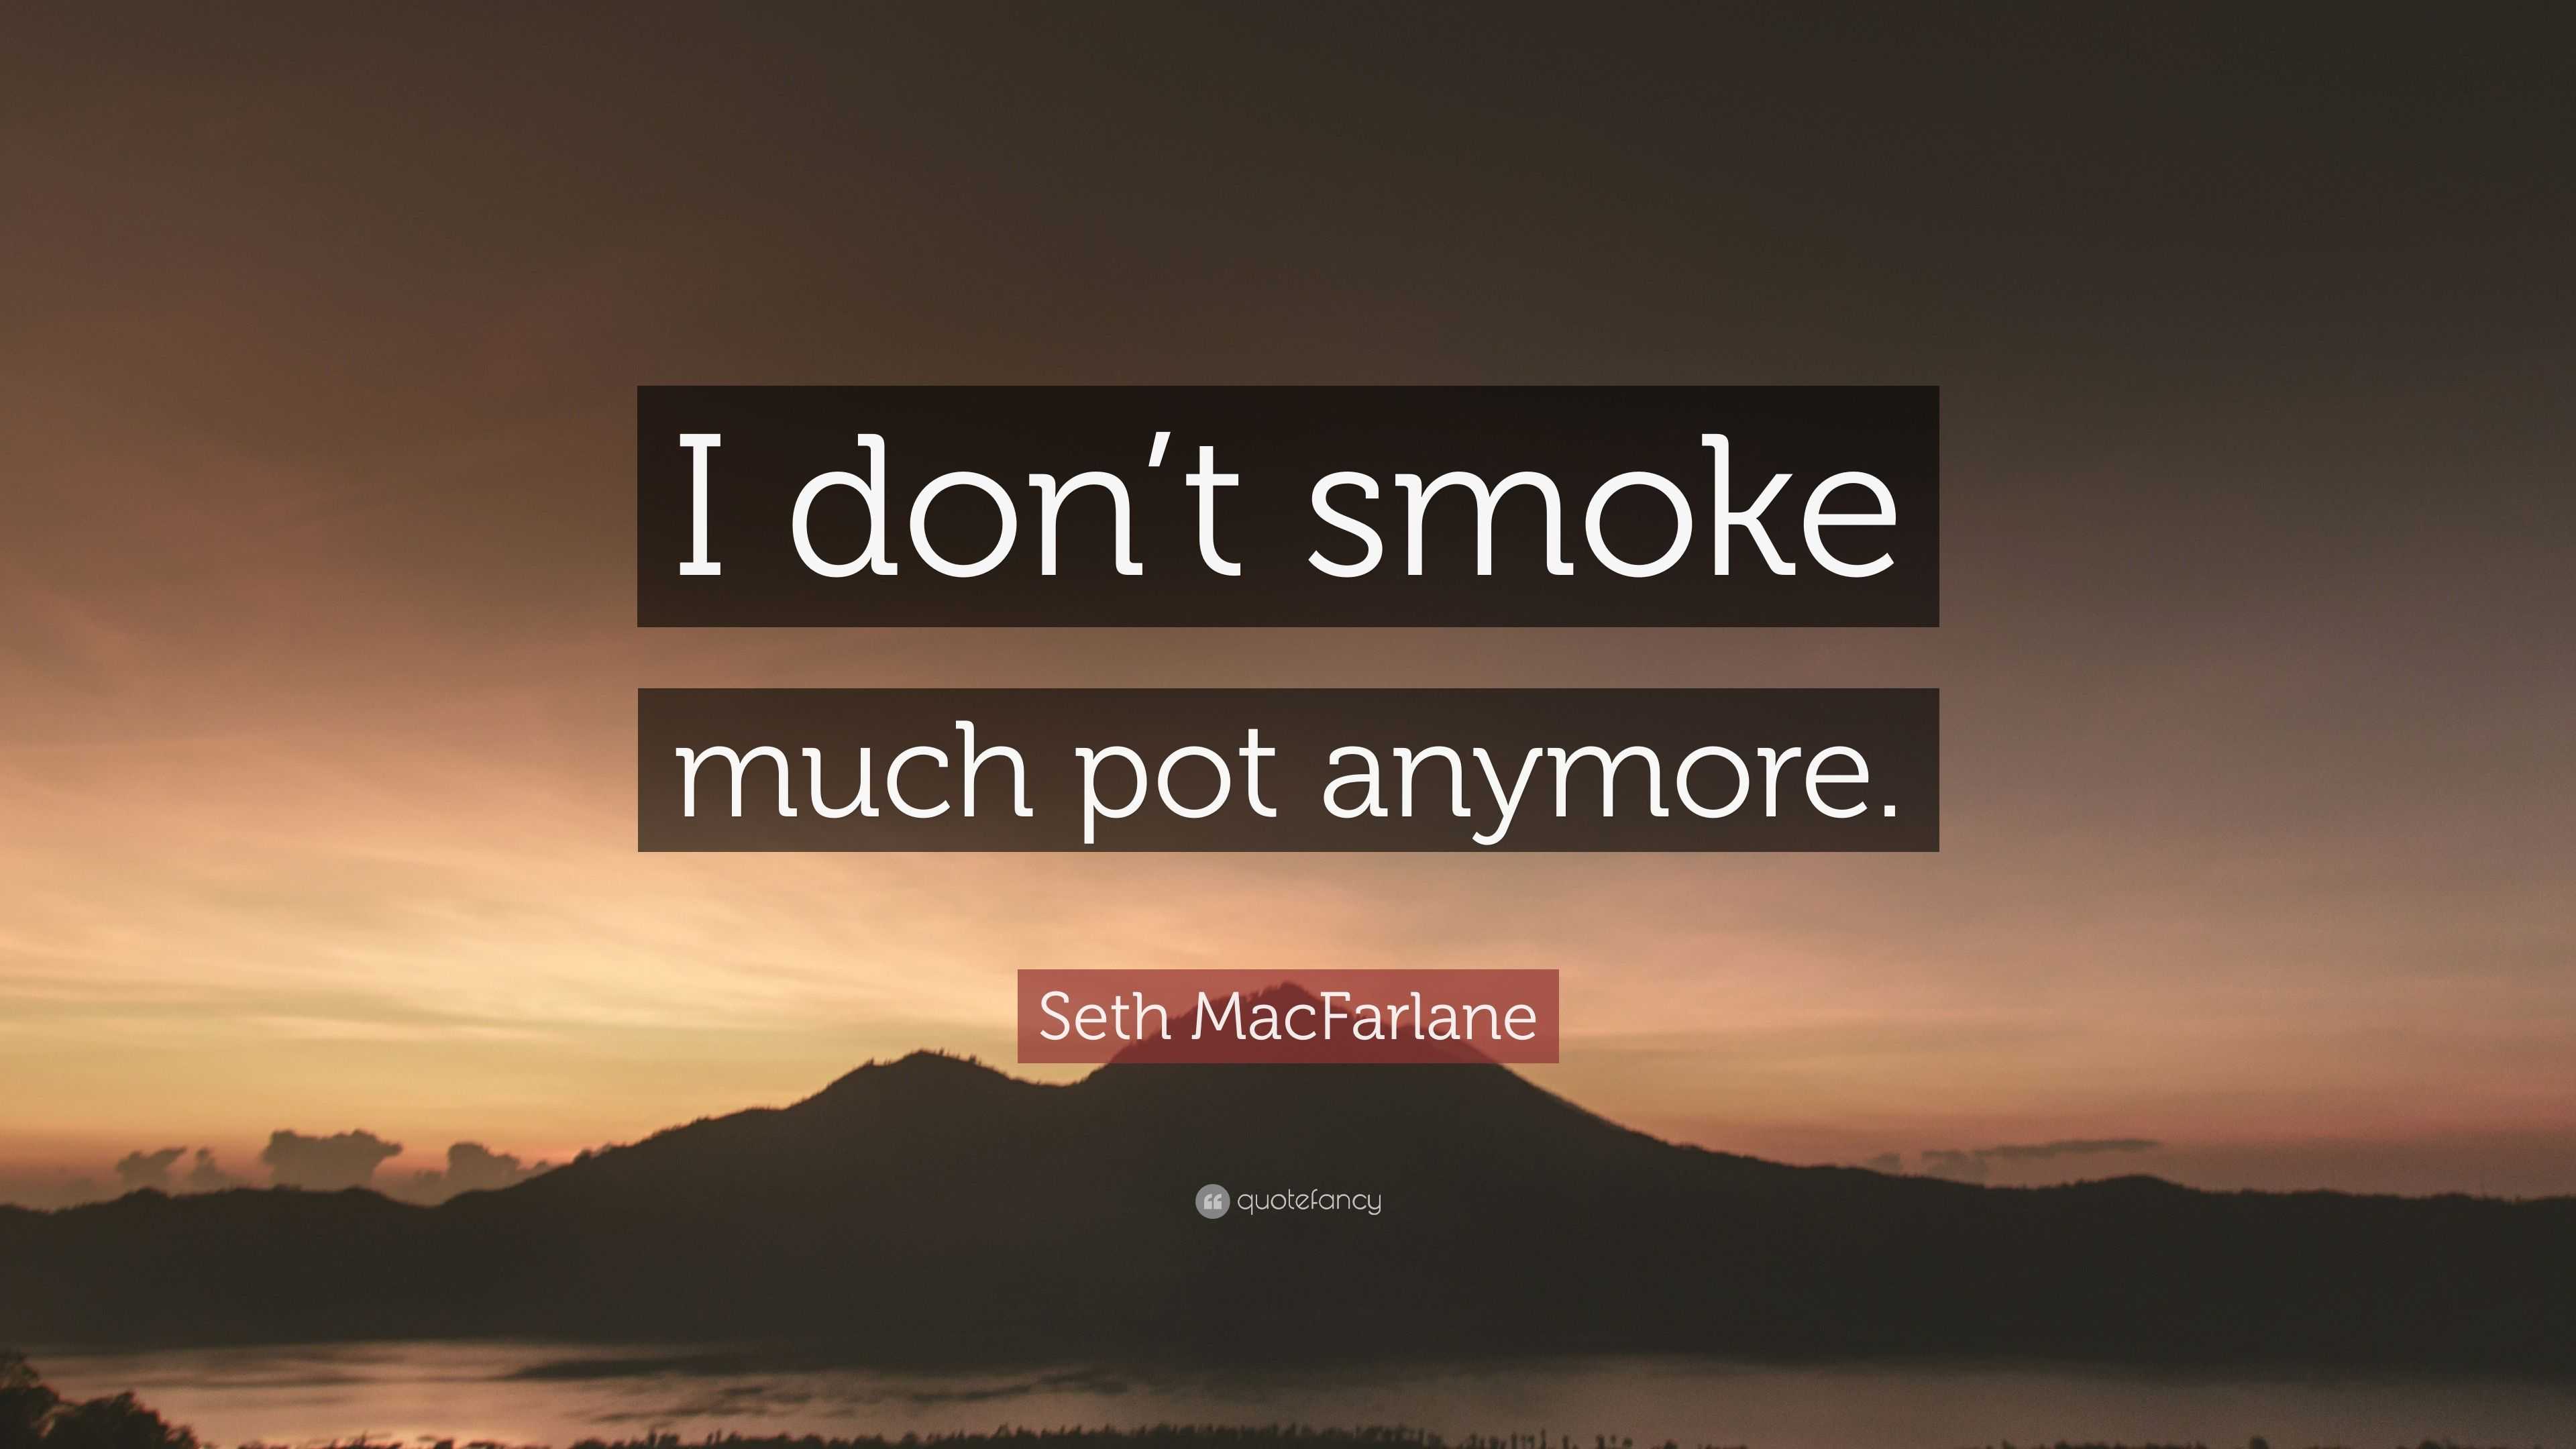 Does seth macfarlane smoke weed